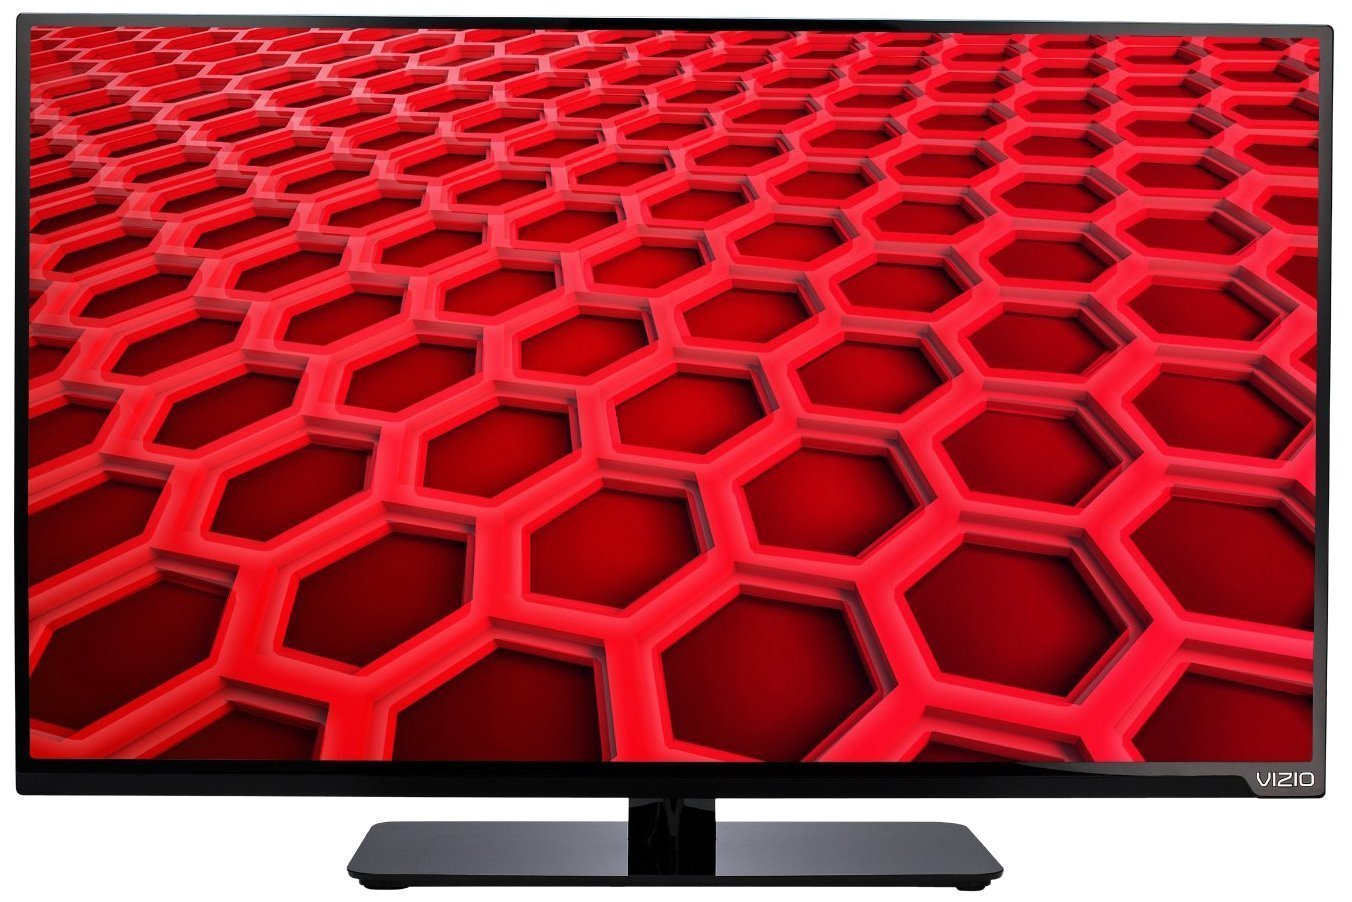 VIZIO E320-B2 720p 60Hz LED TV